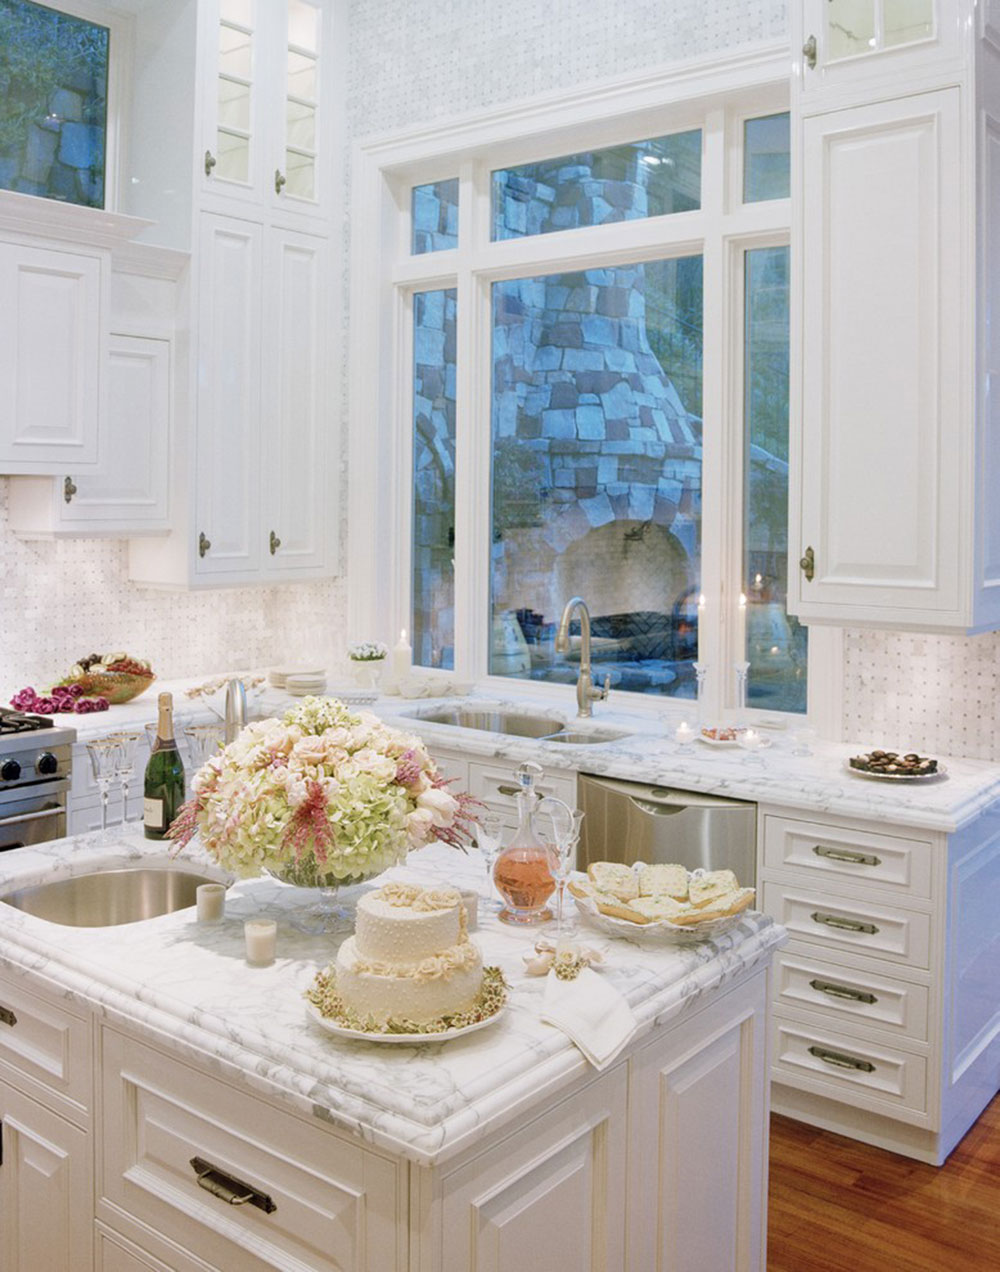 Bright-Your-Kitchen-With-Sparkling-White-Quartz-Countertop6 Sparkling White Quartz Countertop For Your Kitchen Design